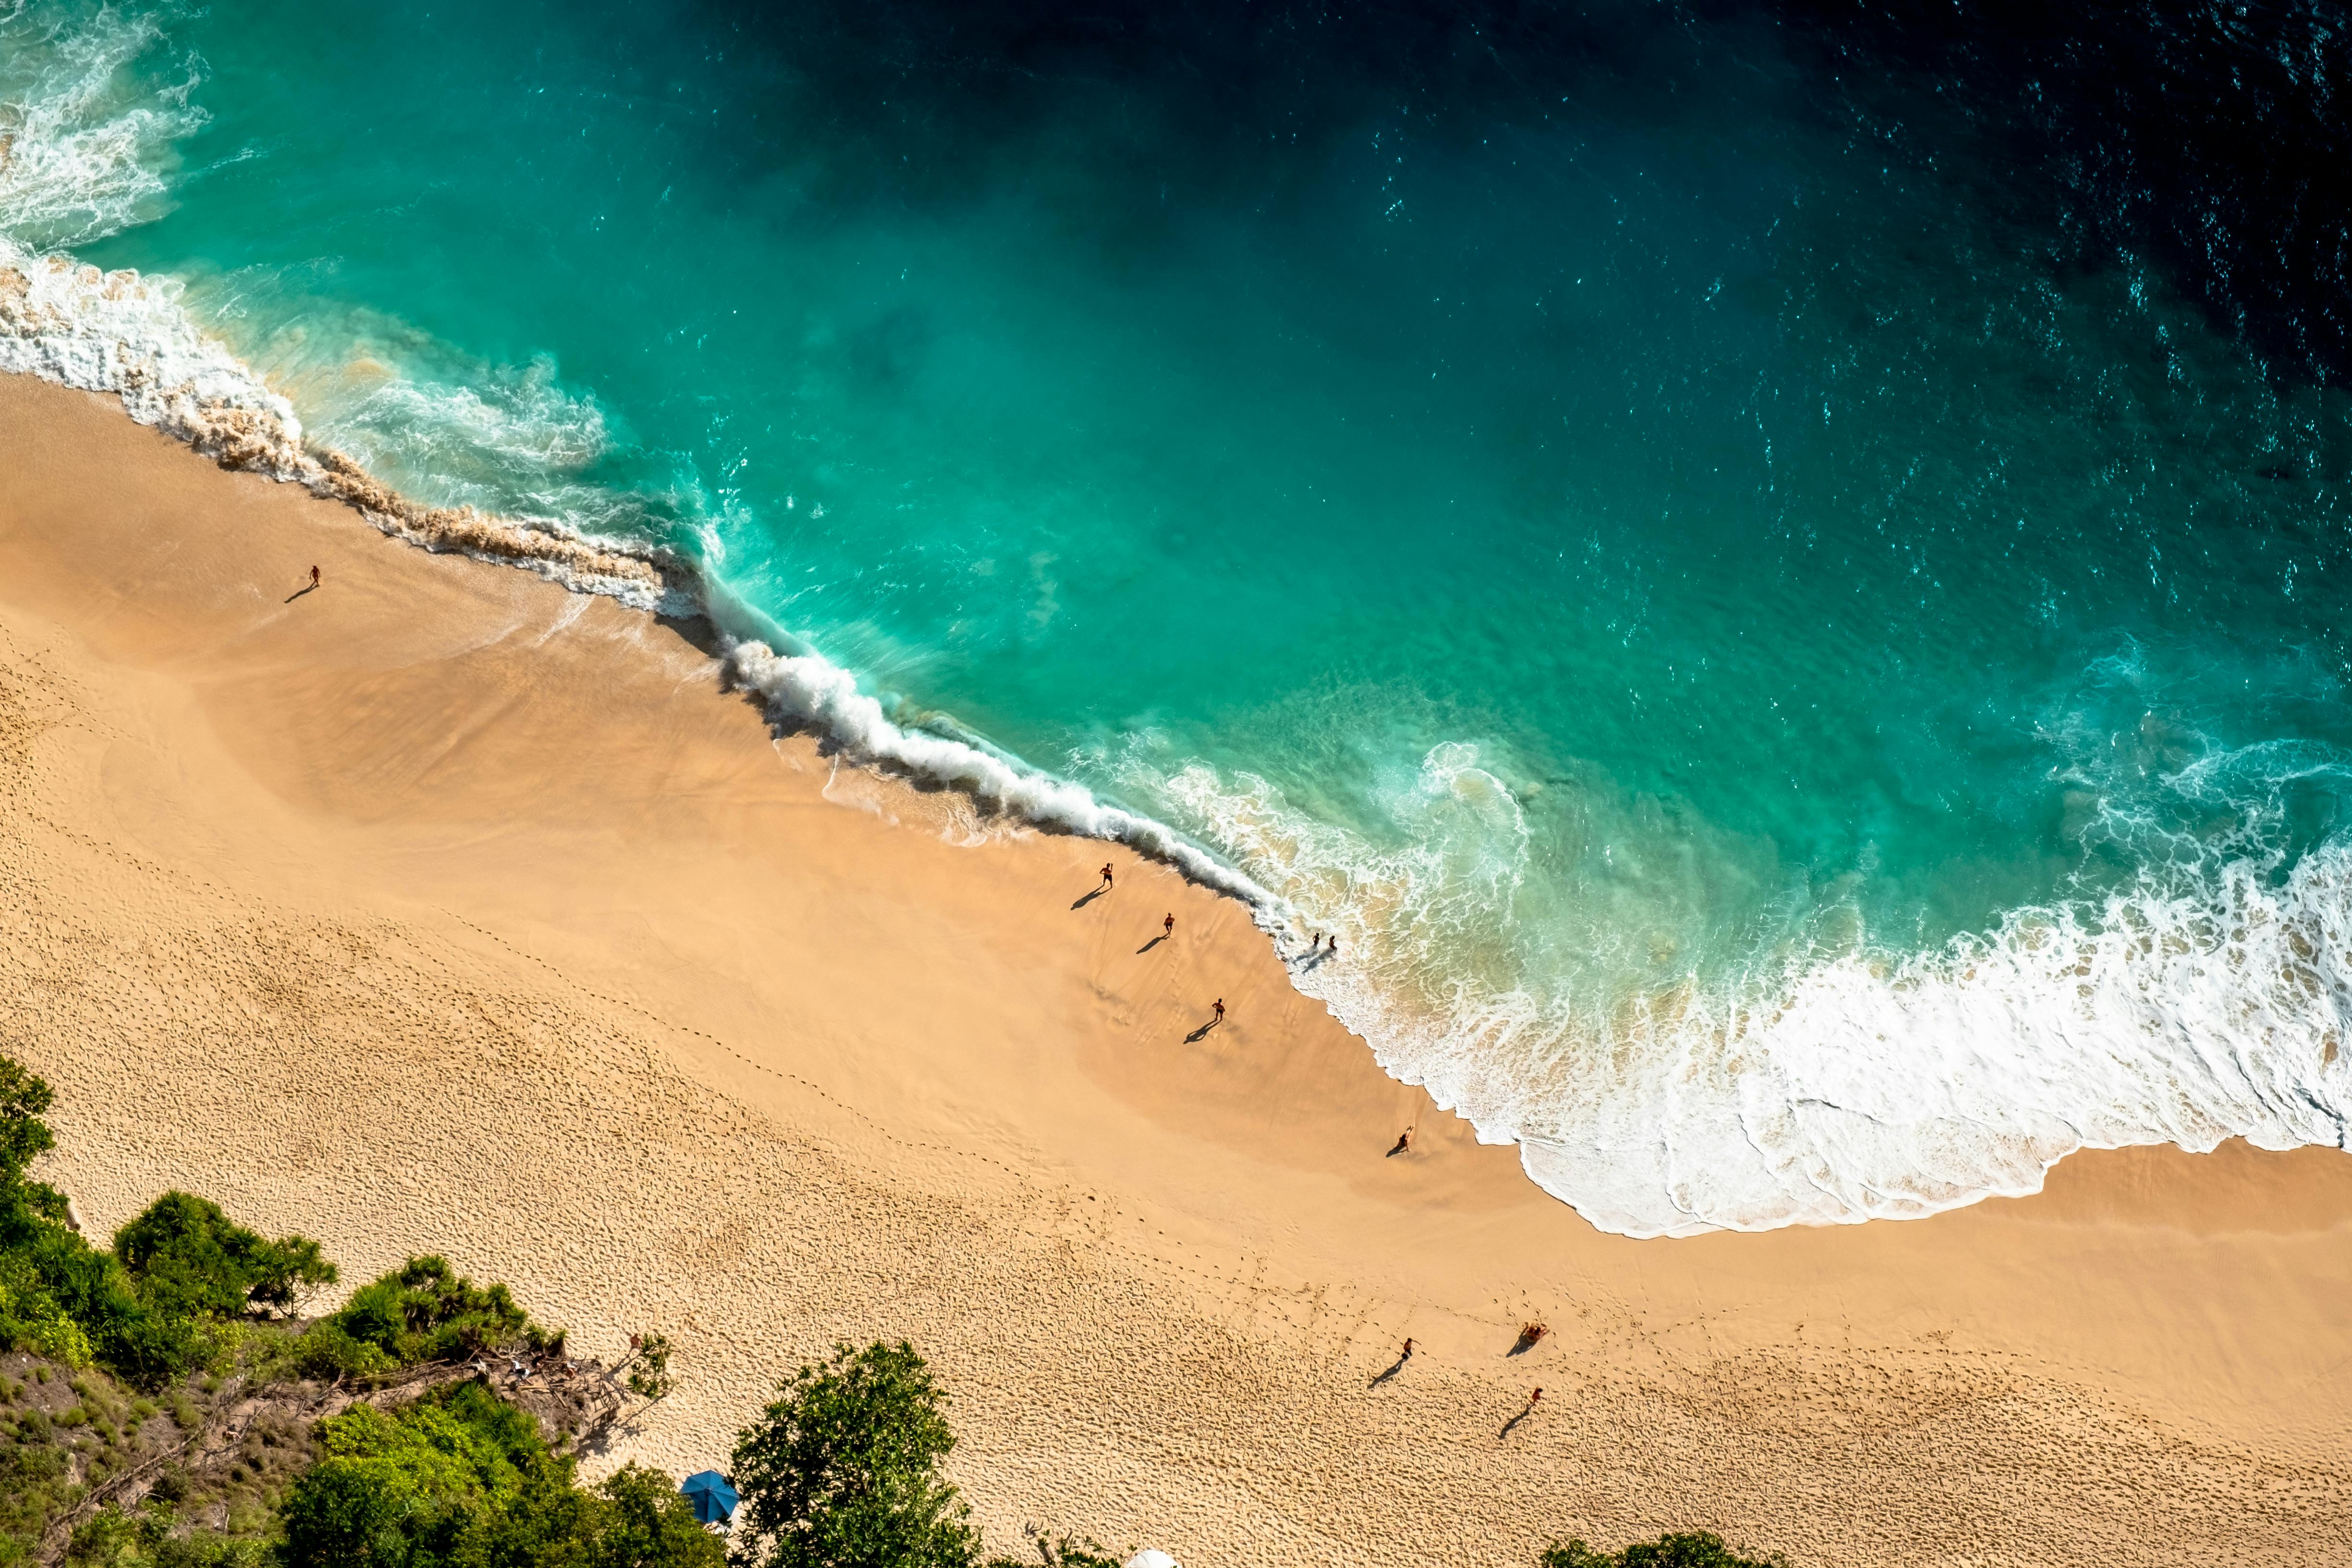  Drone  Shot of Beach  Shore  Free Stock Photo